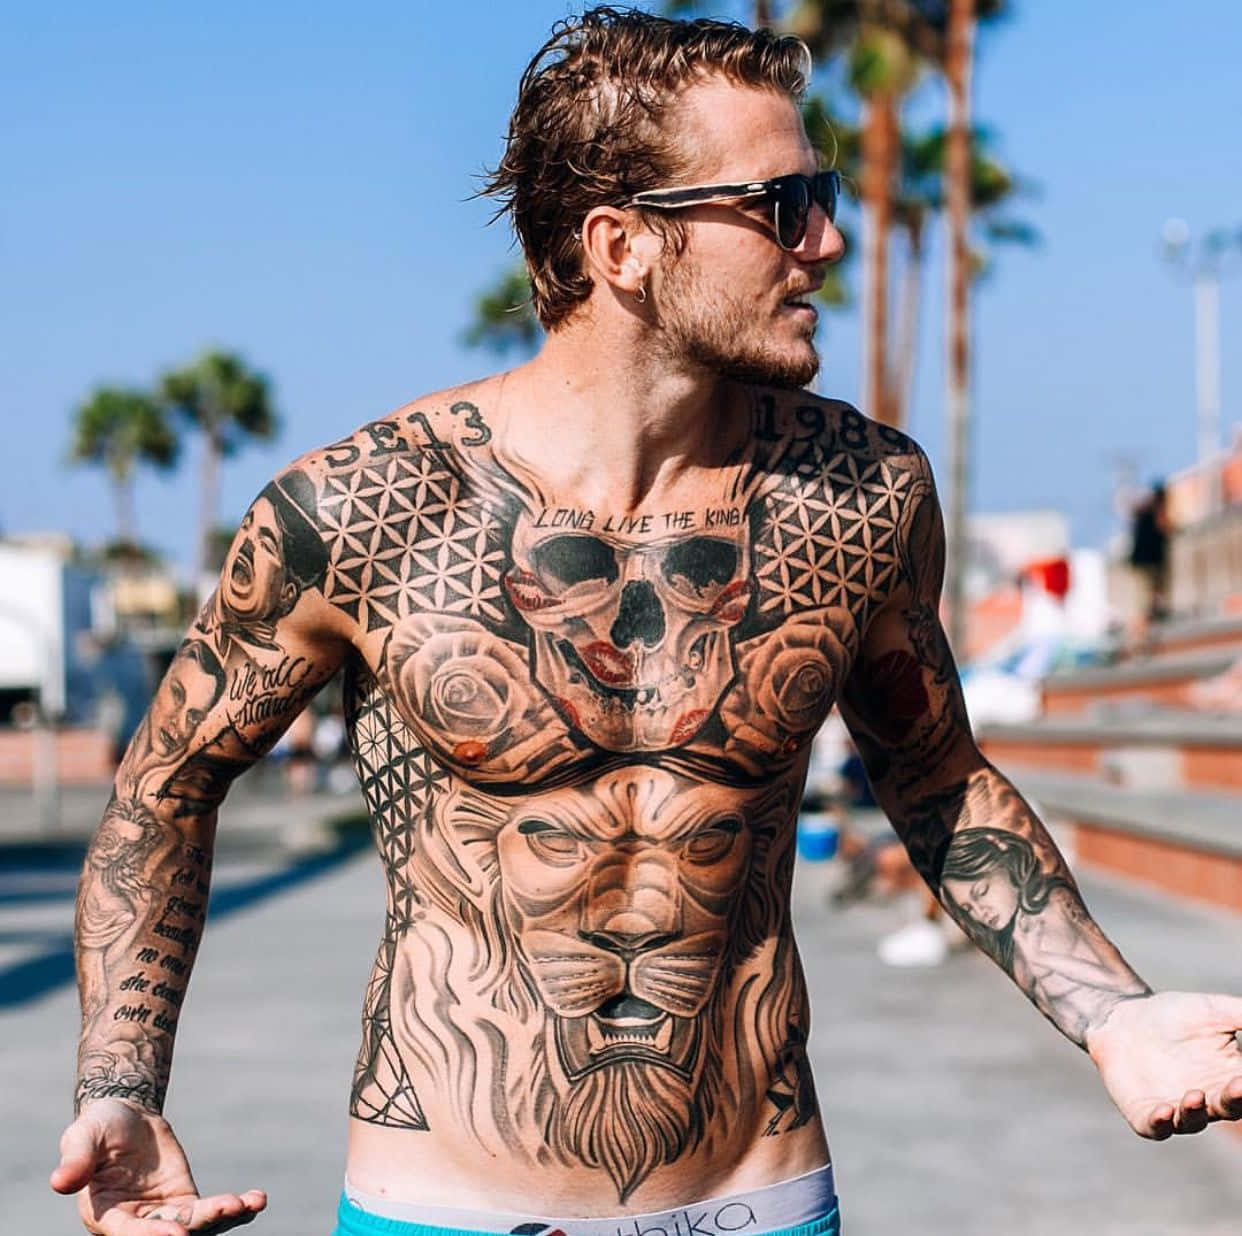 Tattoo Boy stock image. Image of recreation, creativity - 911459